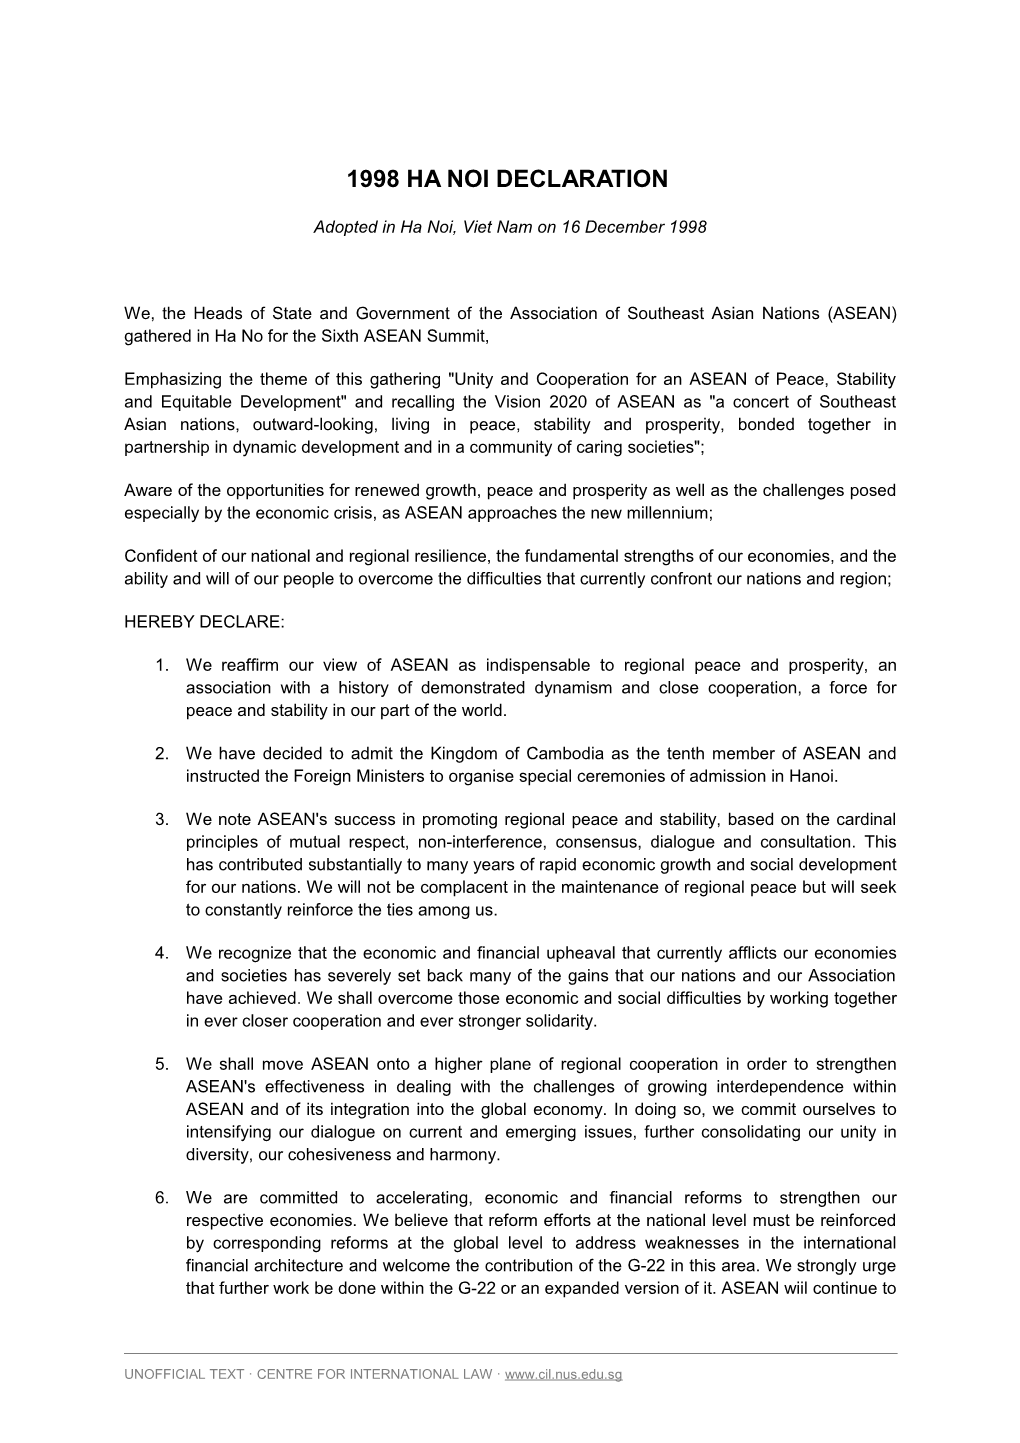 1998 Ha Noi Declaration